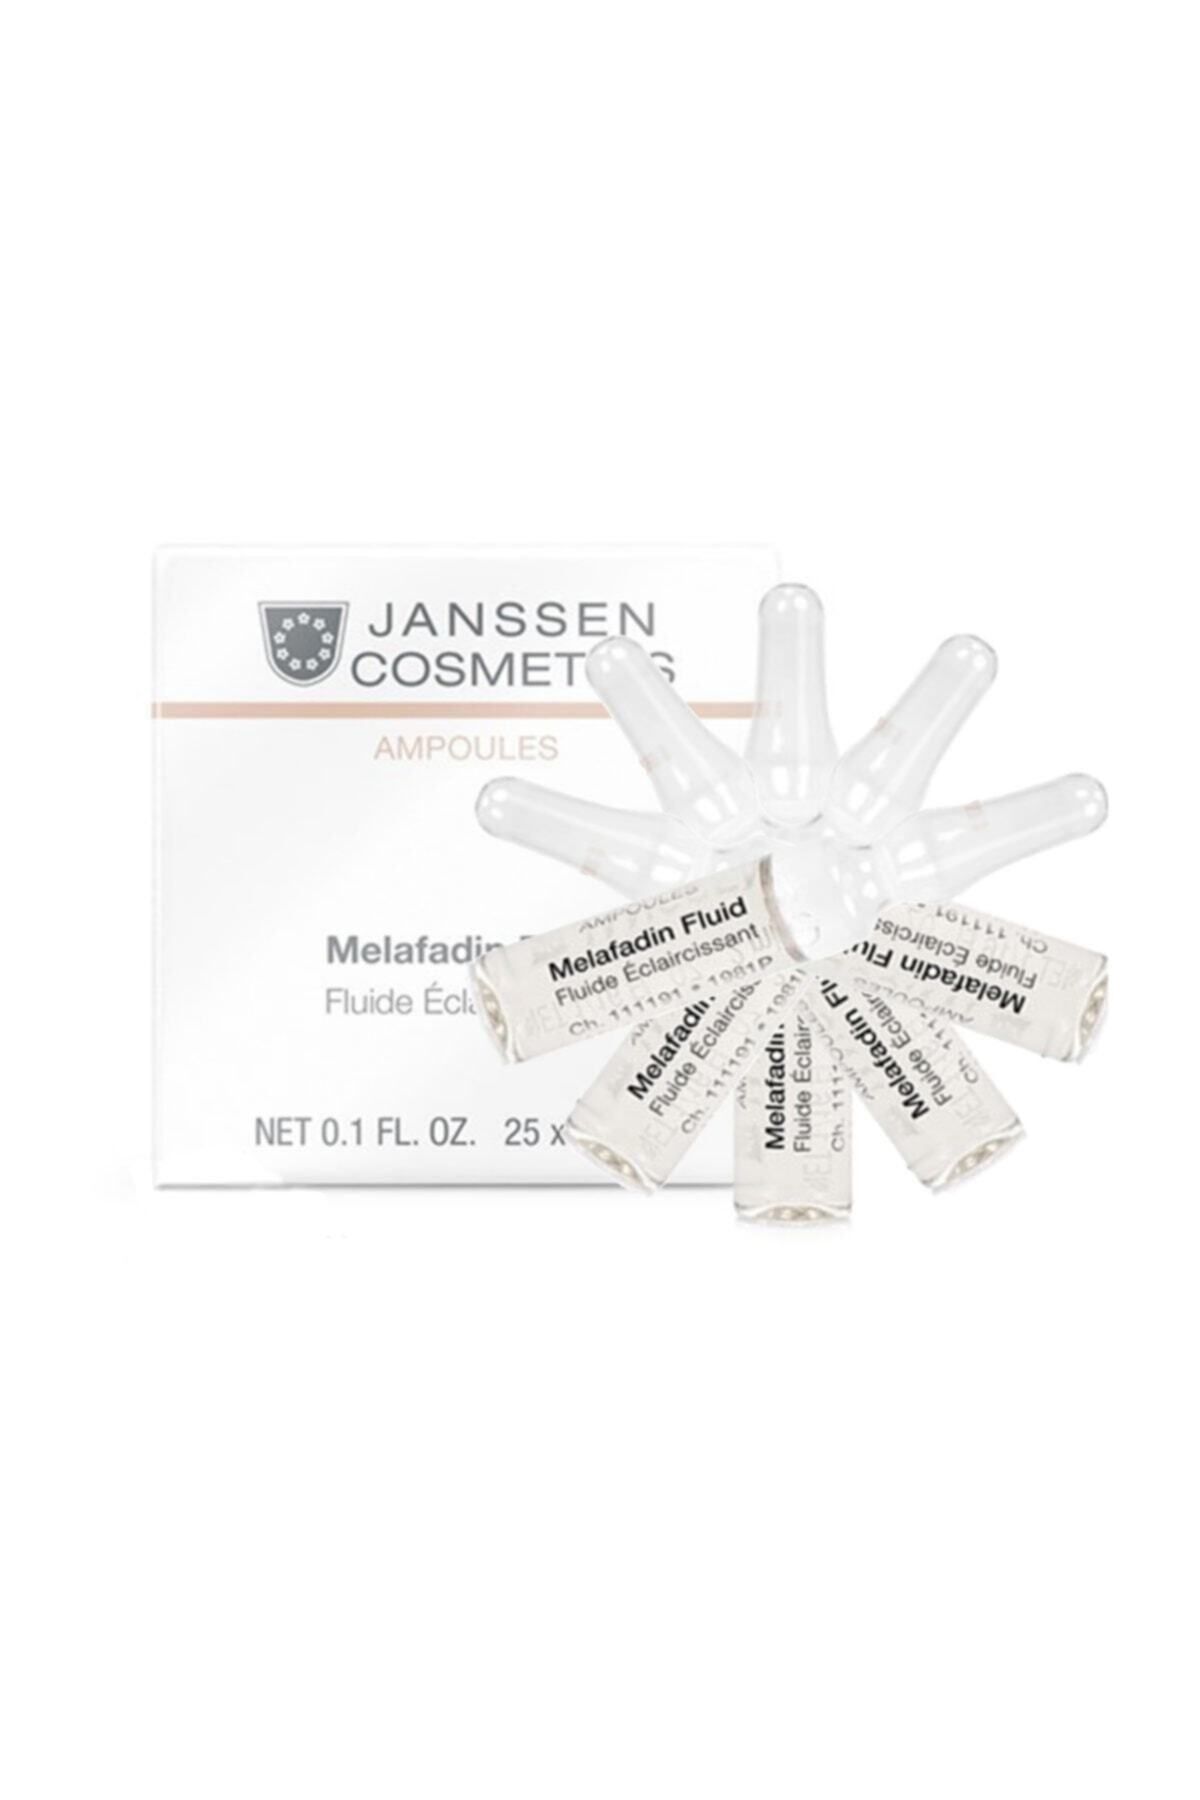 Janssen Cosmetics Melafadin Fluide 2 Ml X 5 Ampul